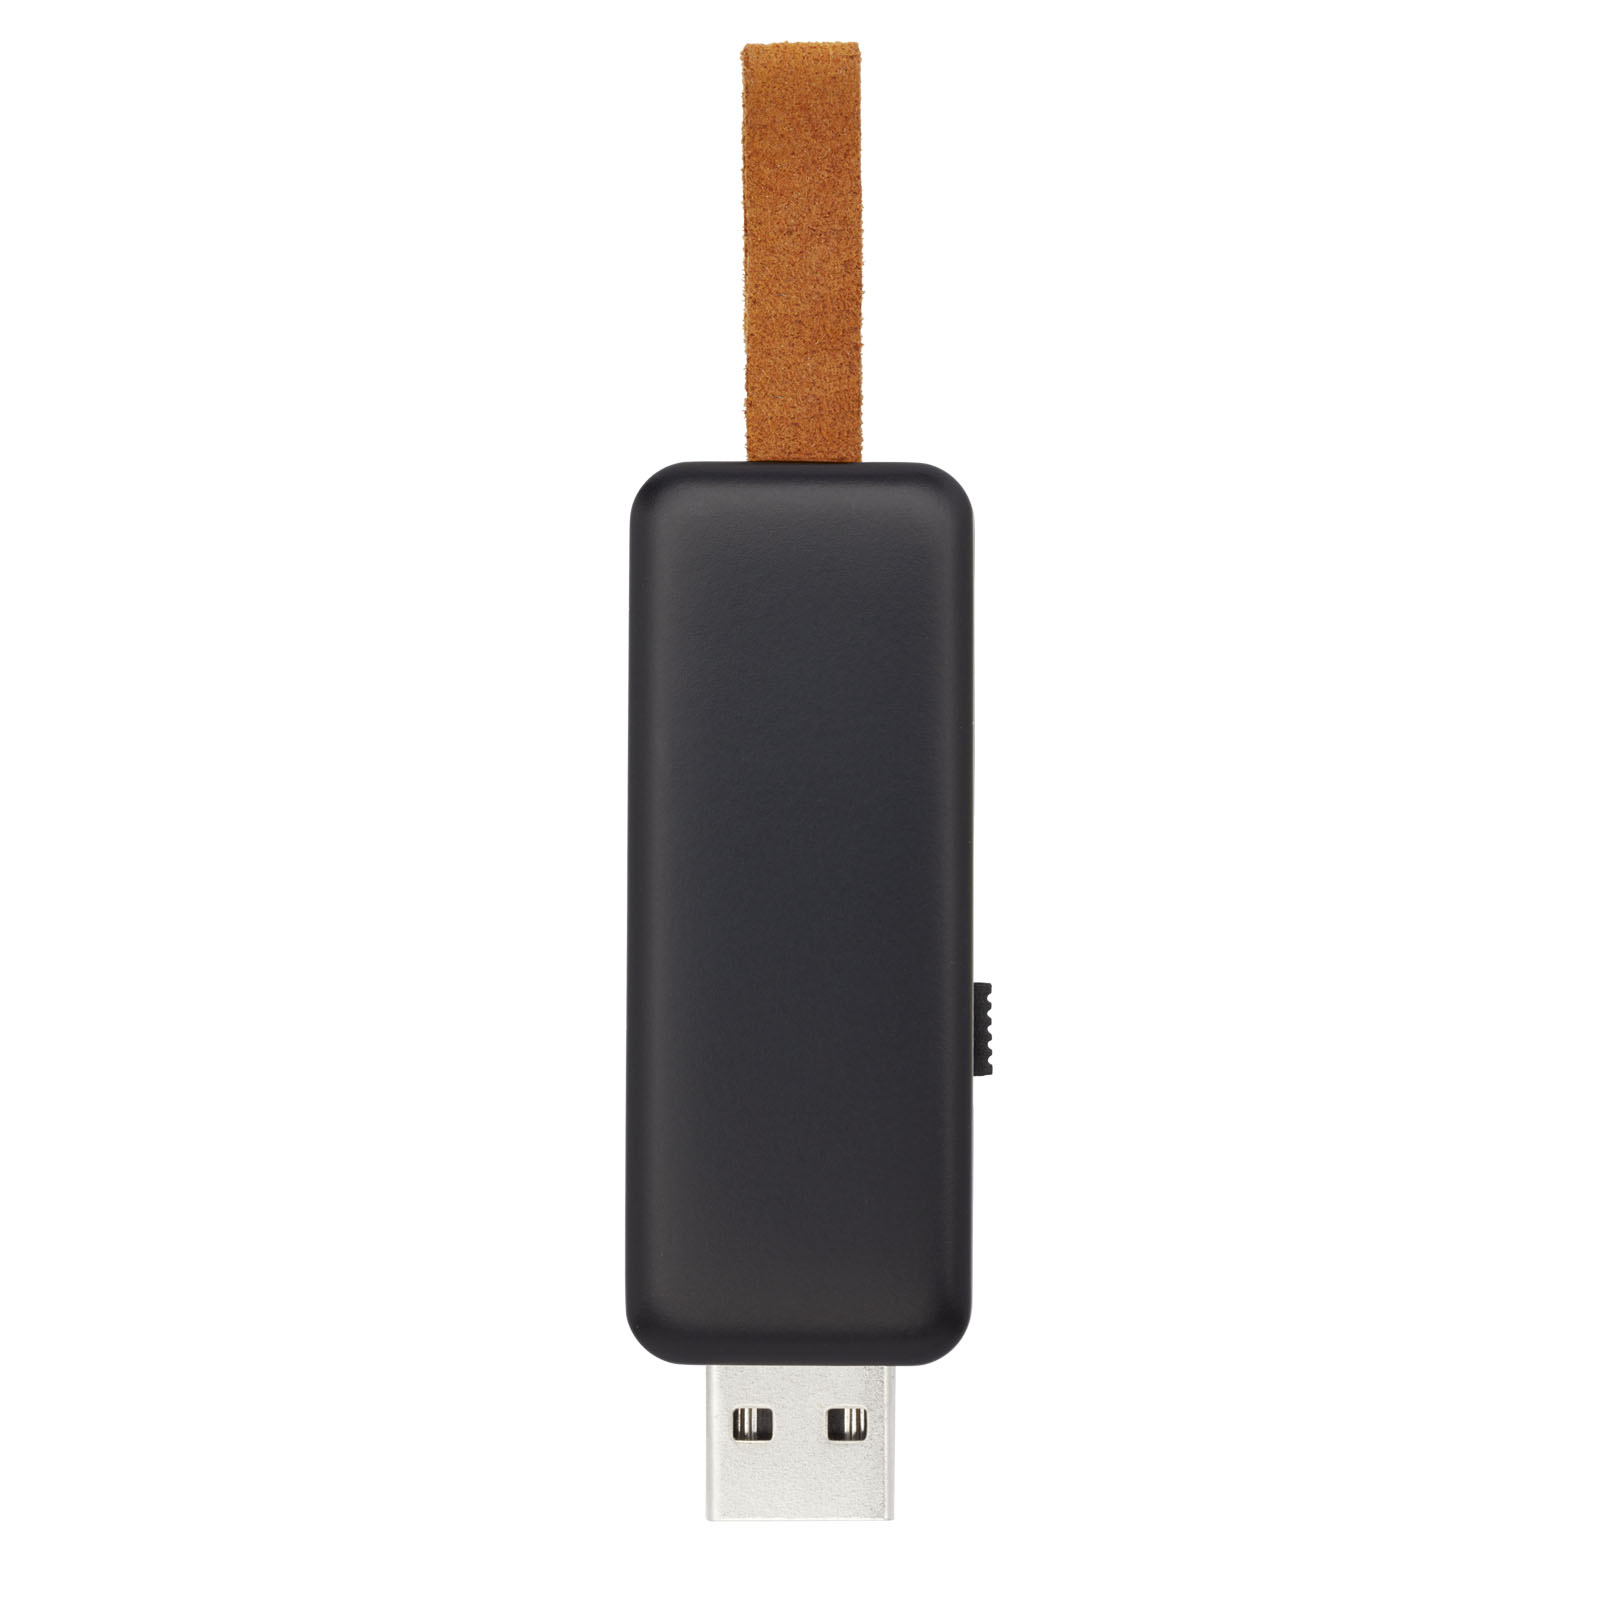 Clés USB publicitaires - Clé USB lumineuse Gleam 16 Go - 1